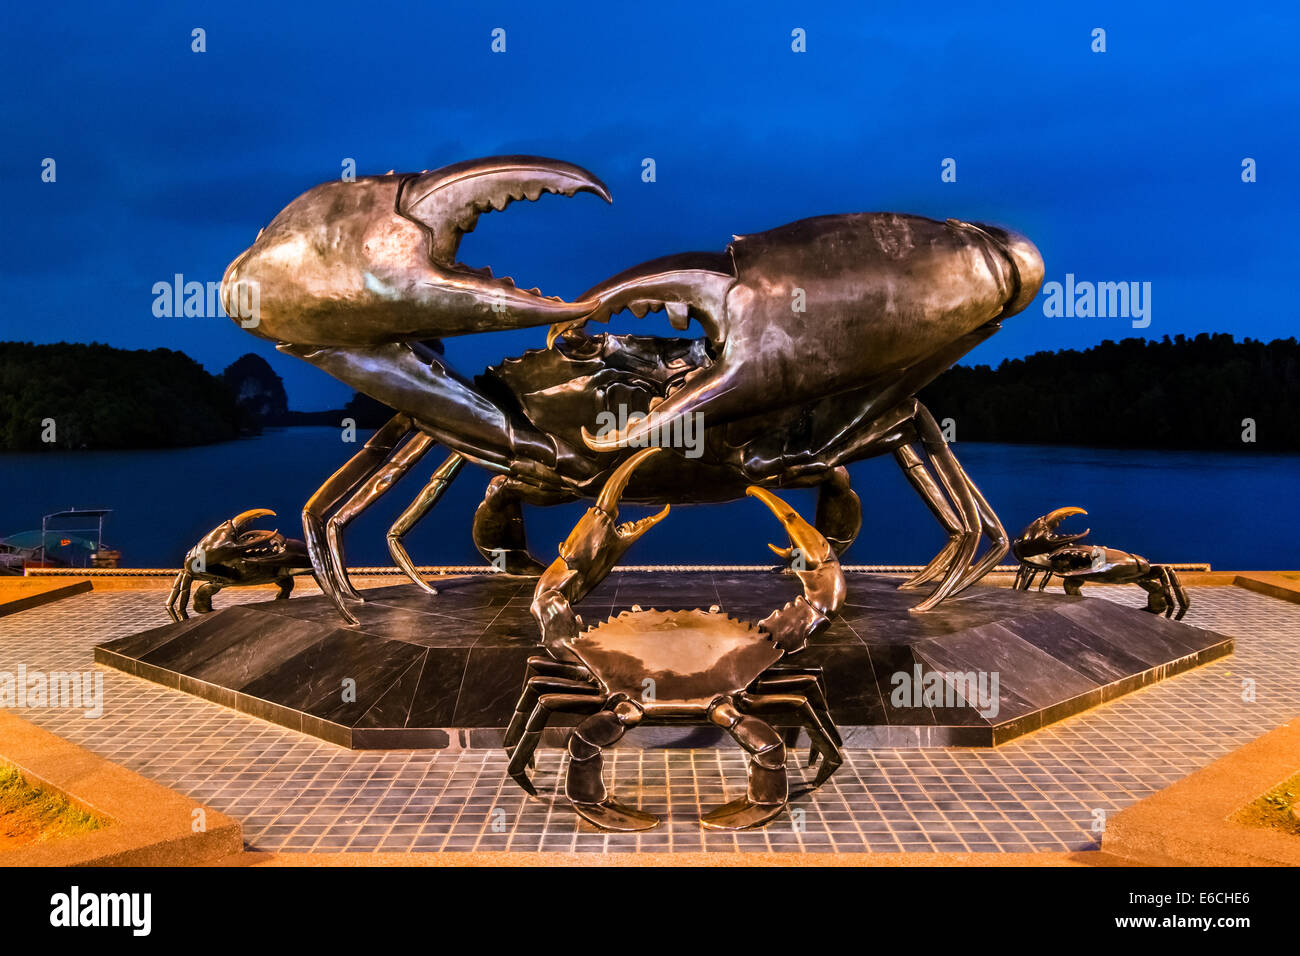 Statue of crabs in Krabi, symbol of town, Thailand. Stock Photo